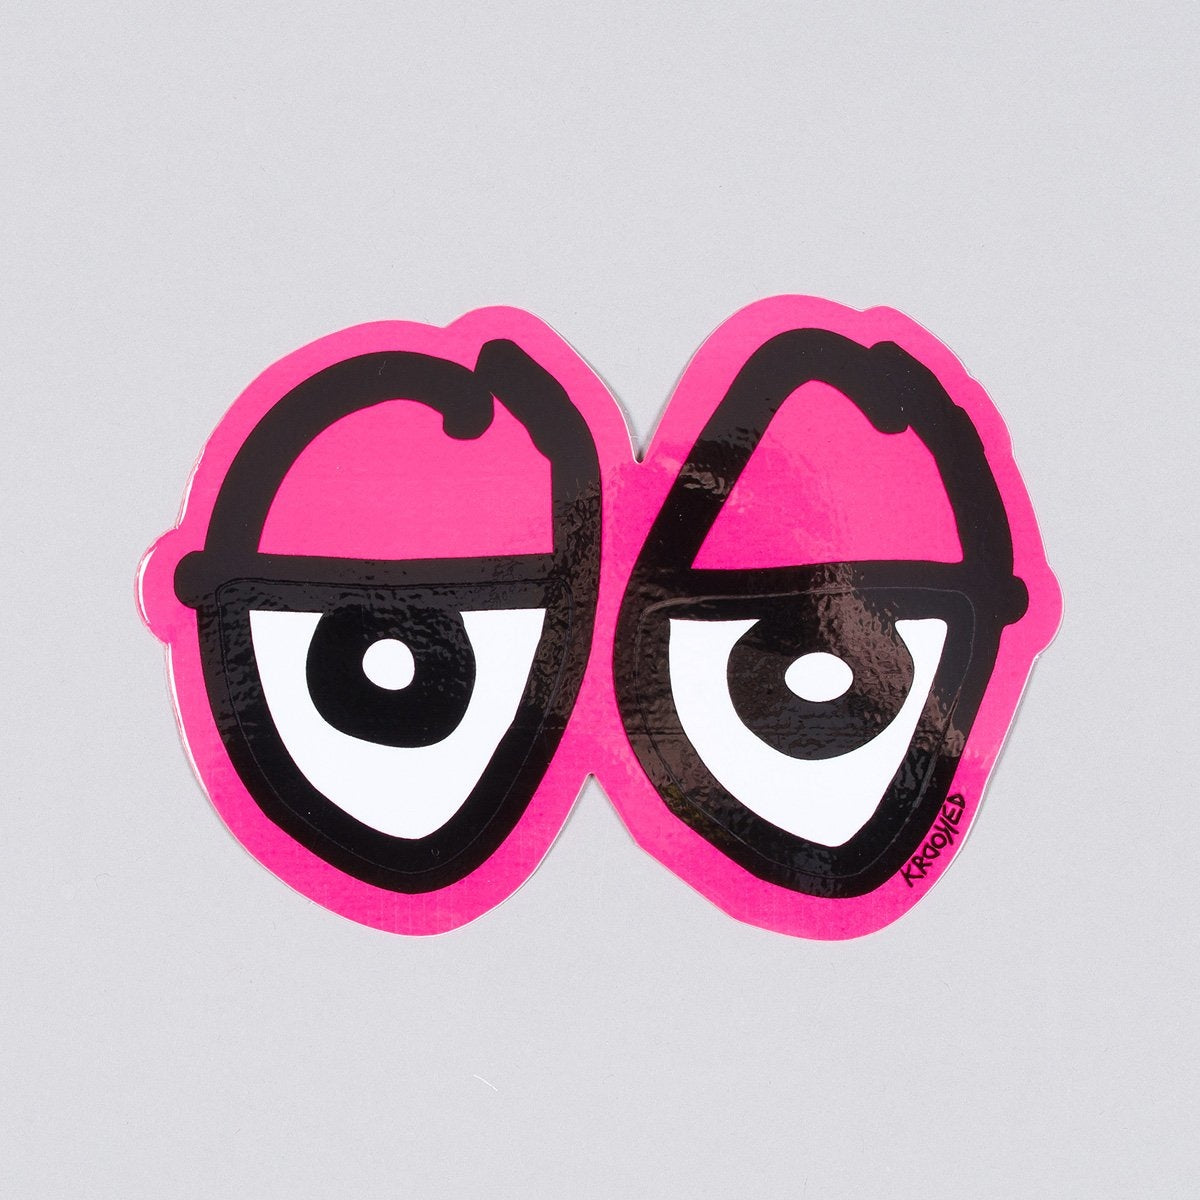 Krooked Eyes Diecut Sticker Pink 140mm x 100mm - Skateboard